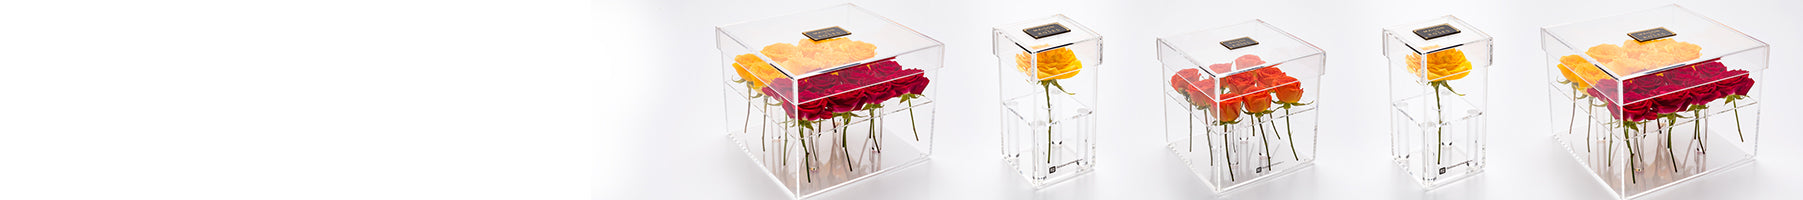 Banner_Smallwares_Decorative_Acrylic-Flower-Boxes_310